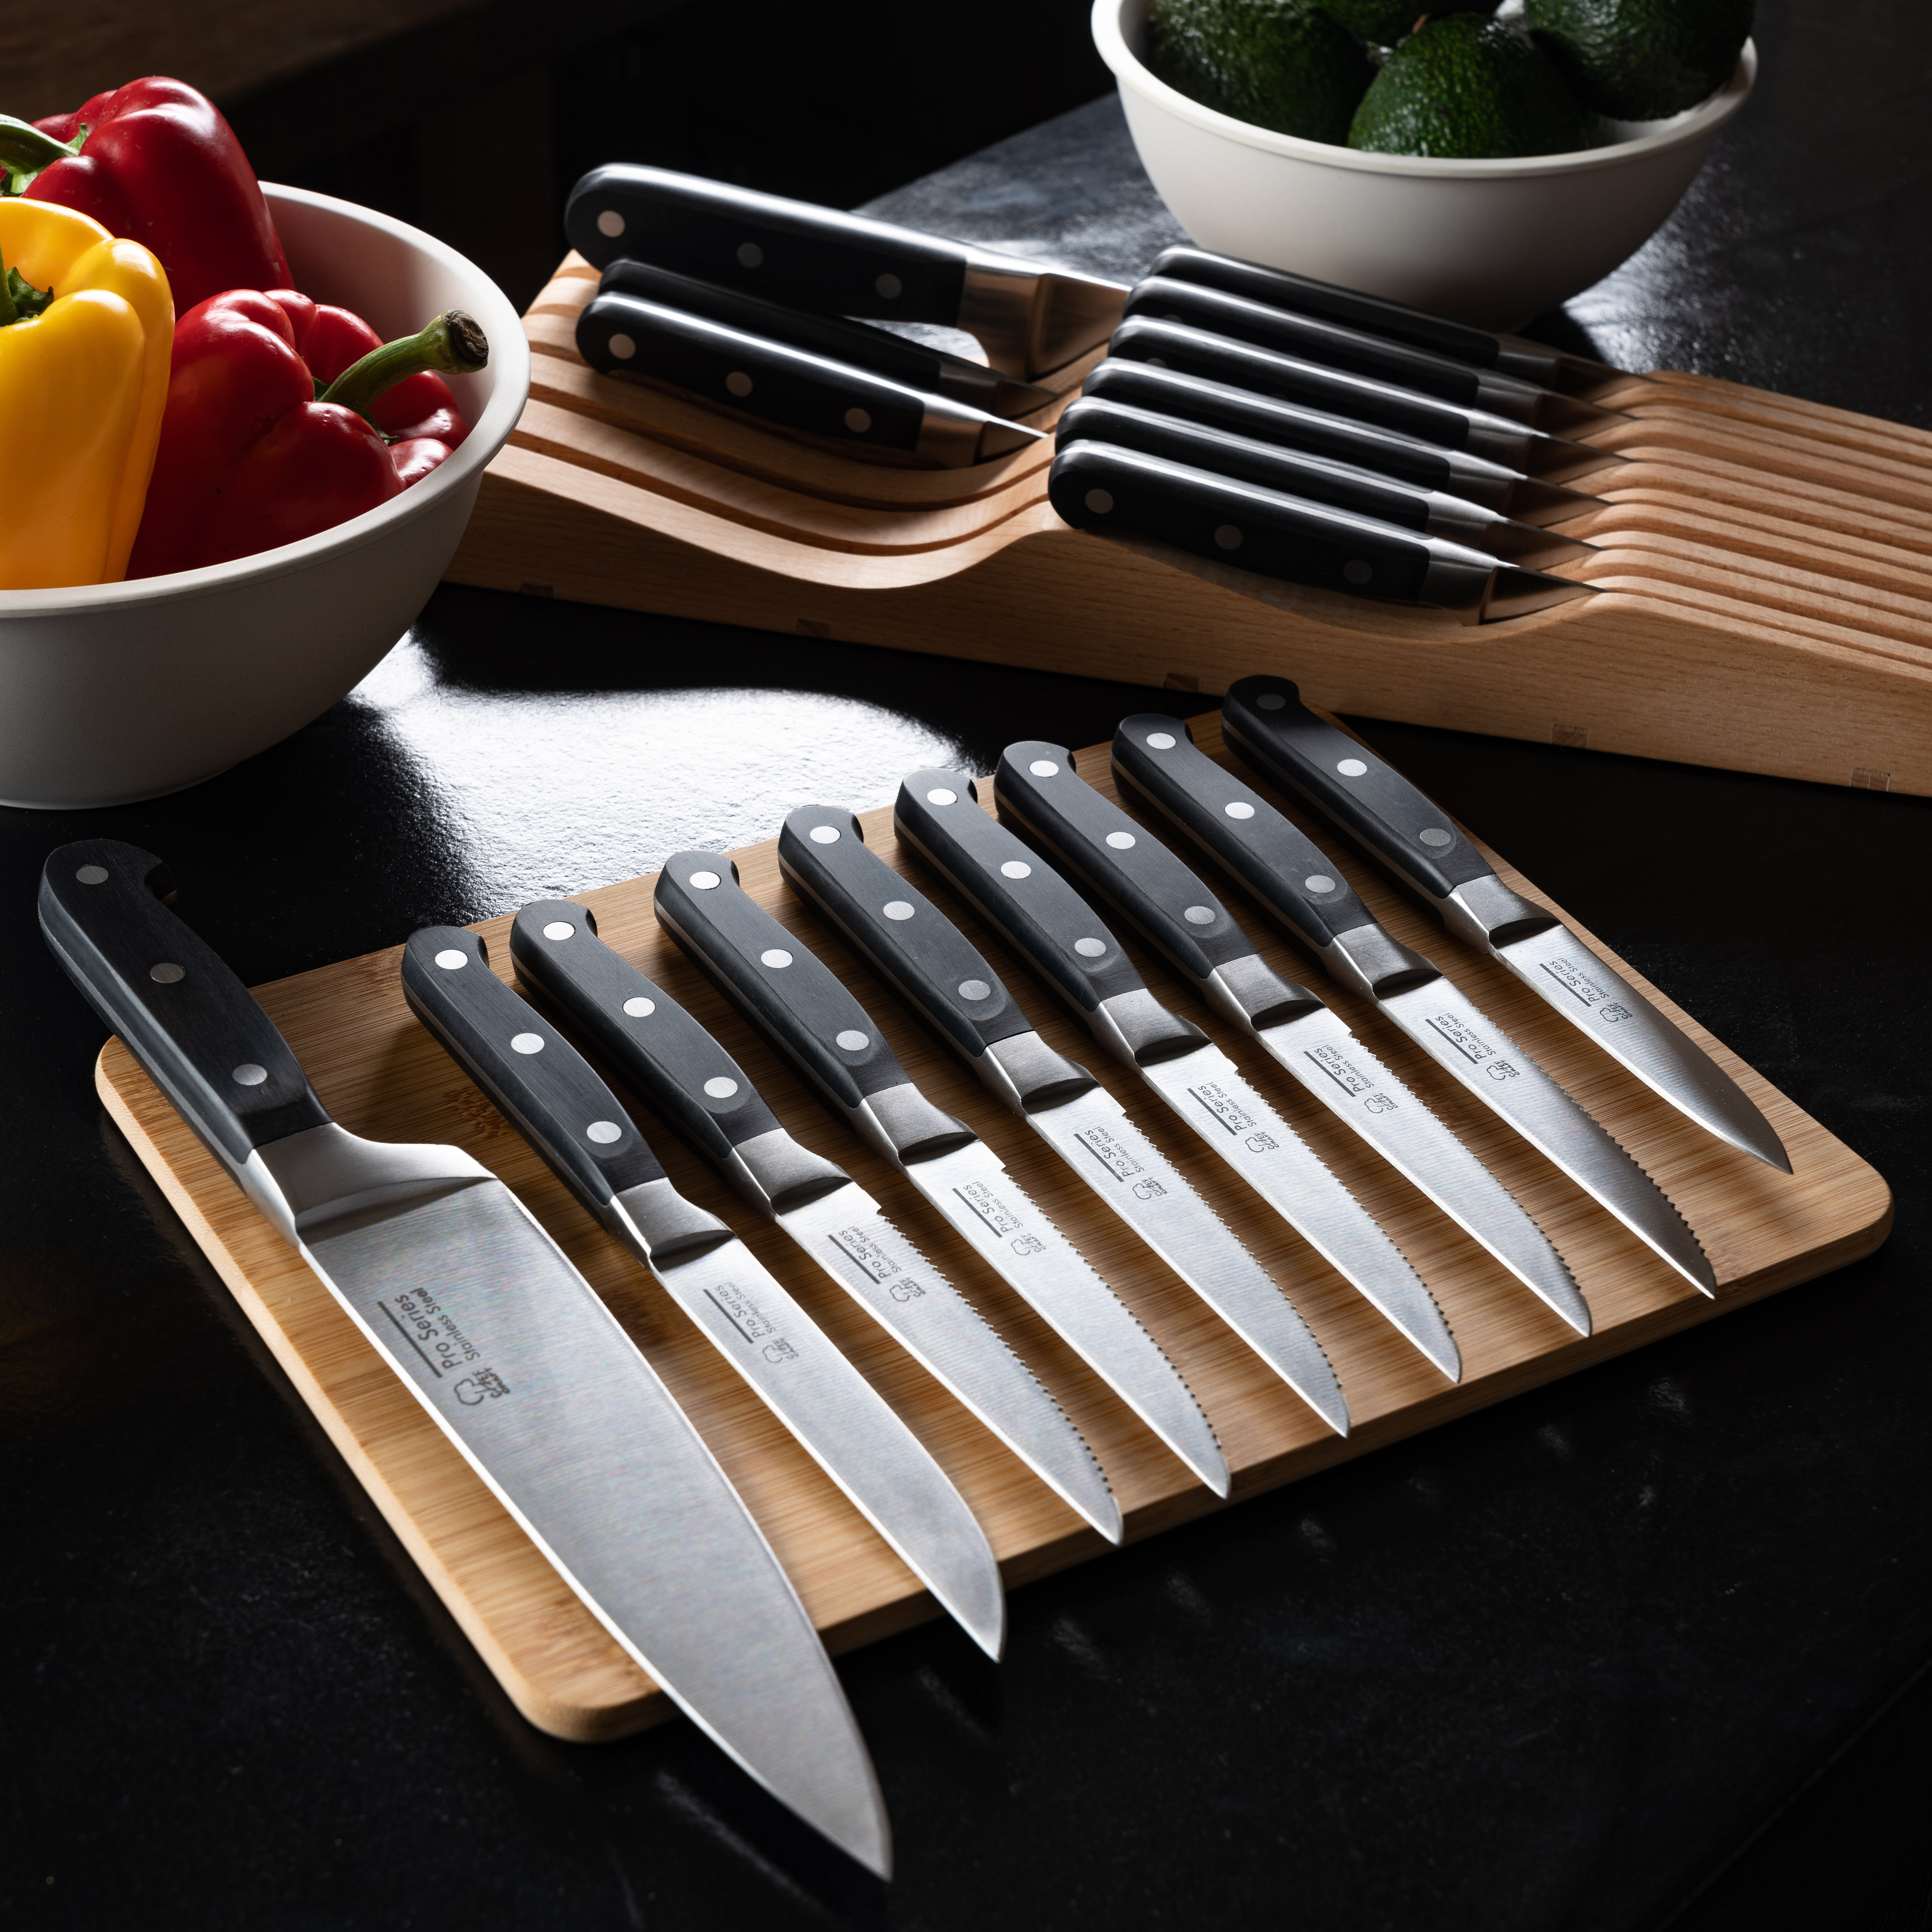 BRODARK Kitchen Knife Set with Block, Stainless Steel Professional